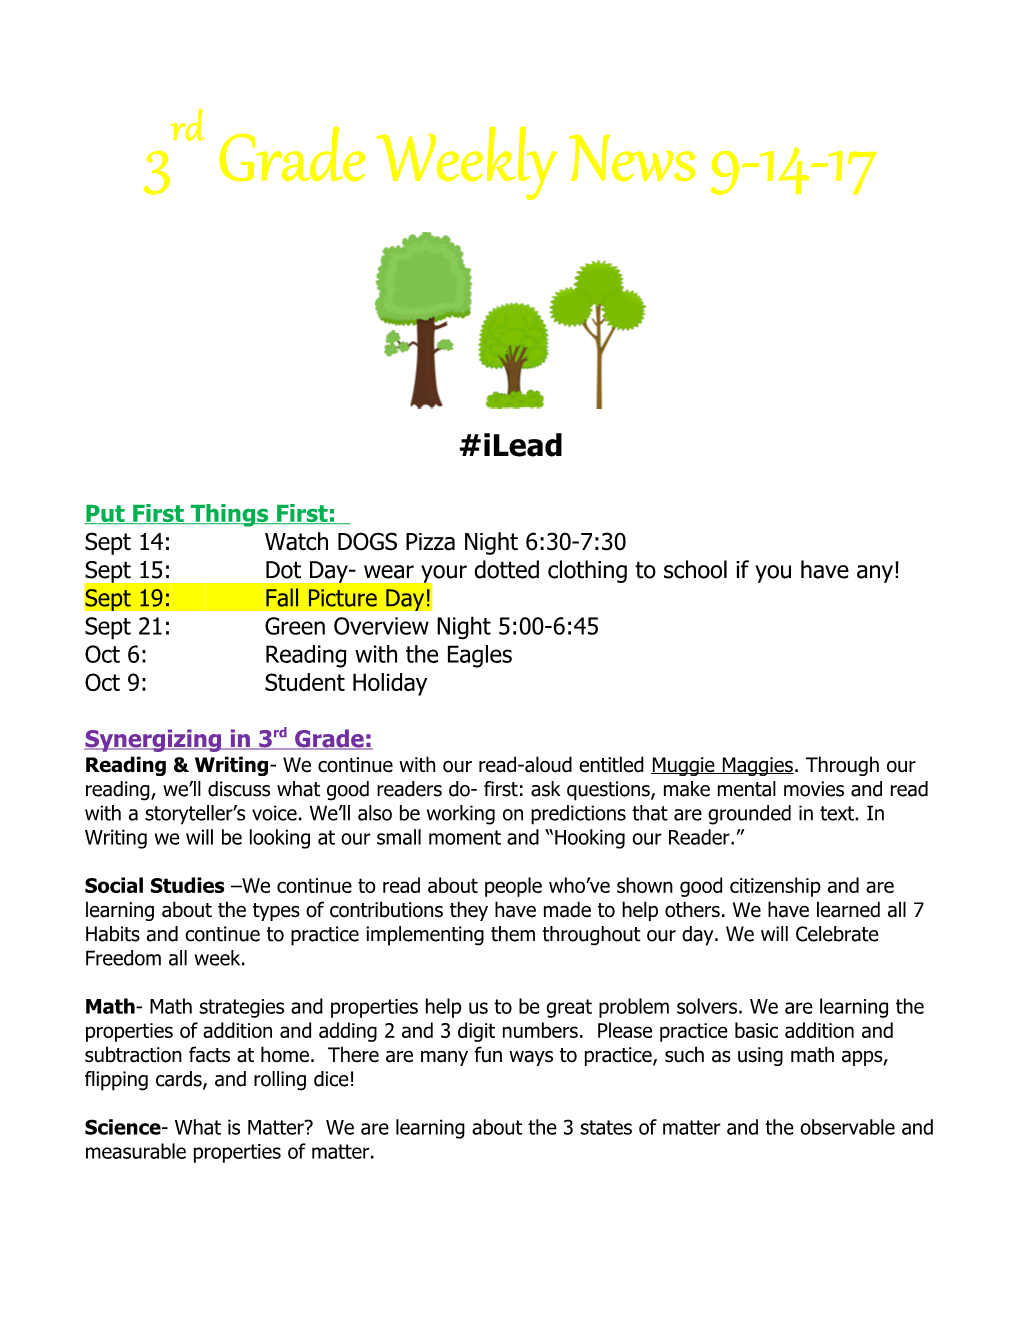 3Rd Grade Weekly News 9-14-17